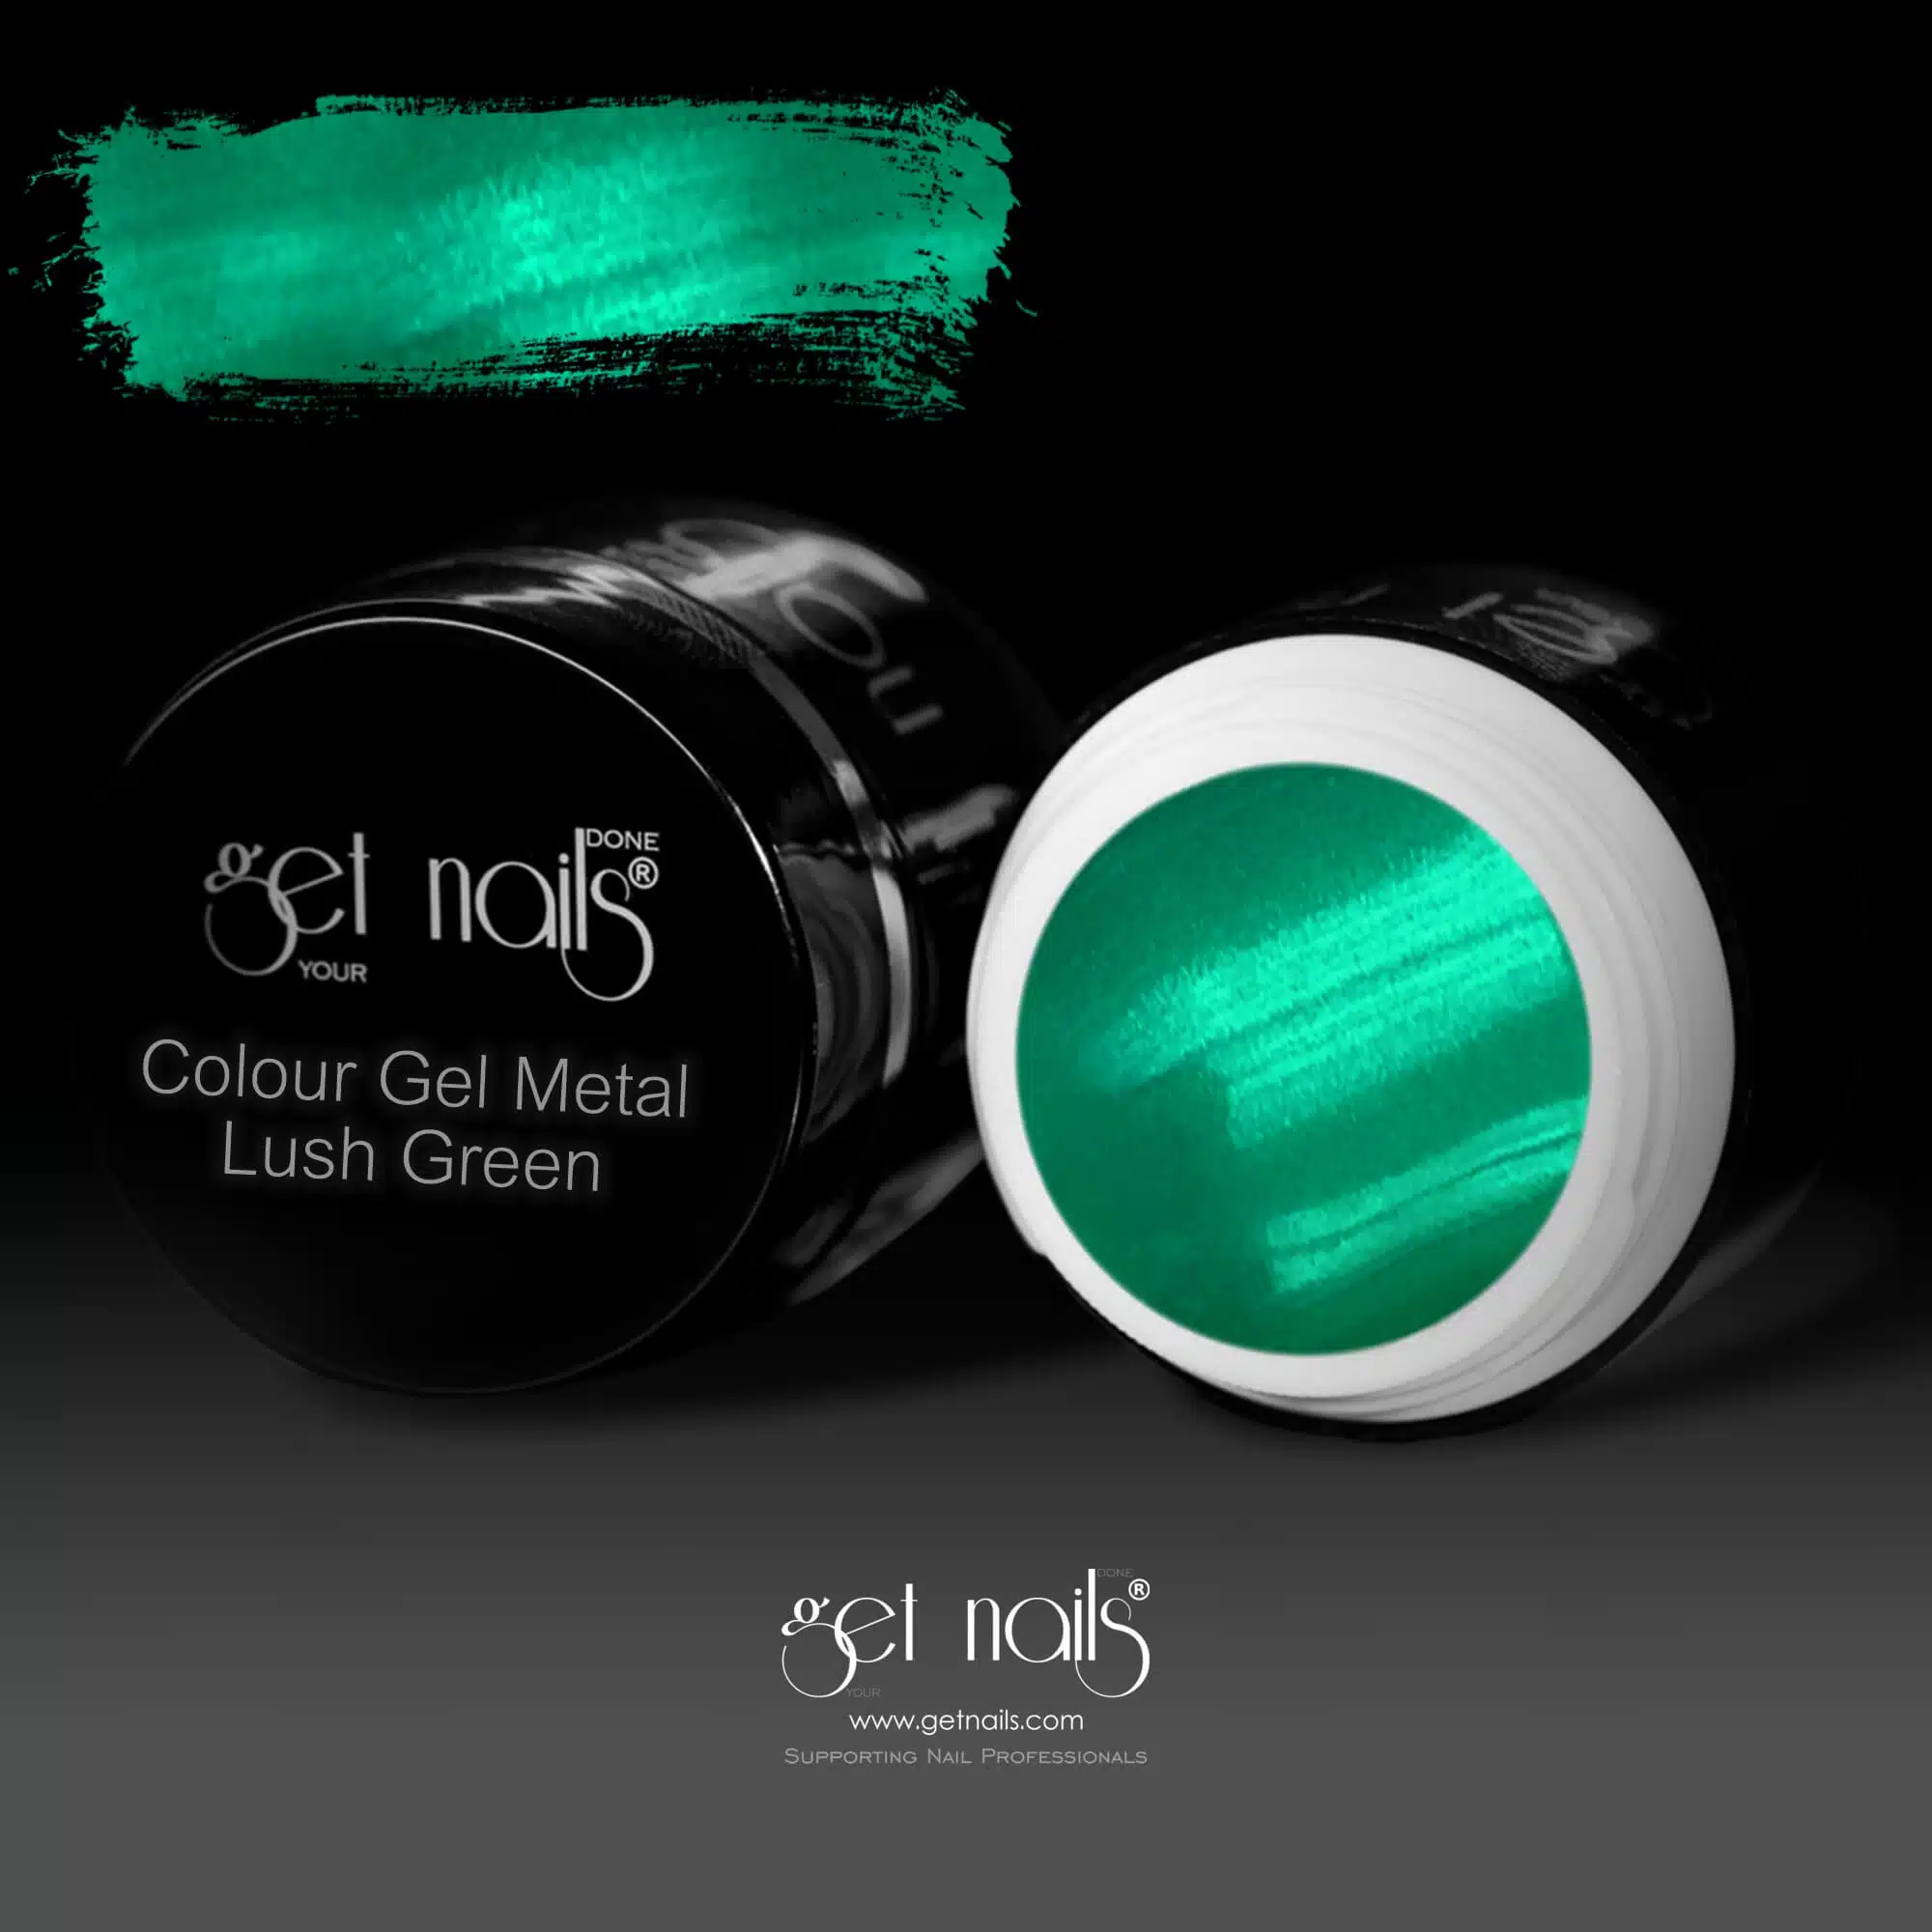 Get Nails Austria - Gel colorato Metal Lush Green 5g